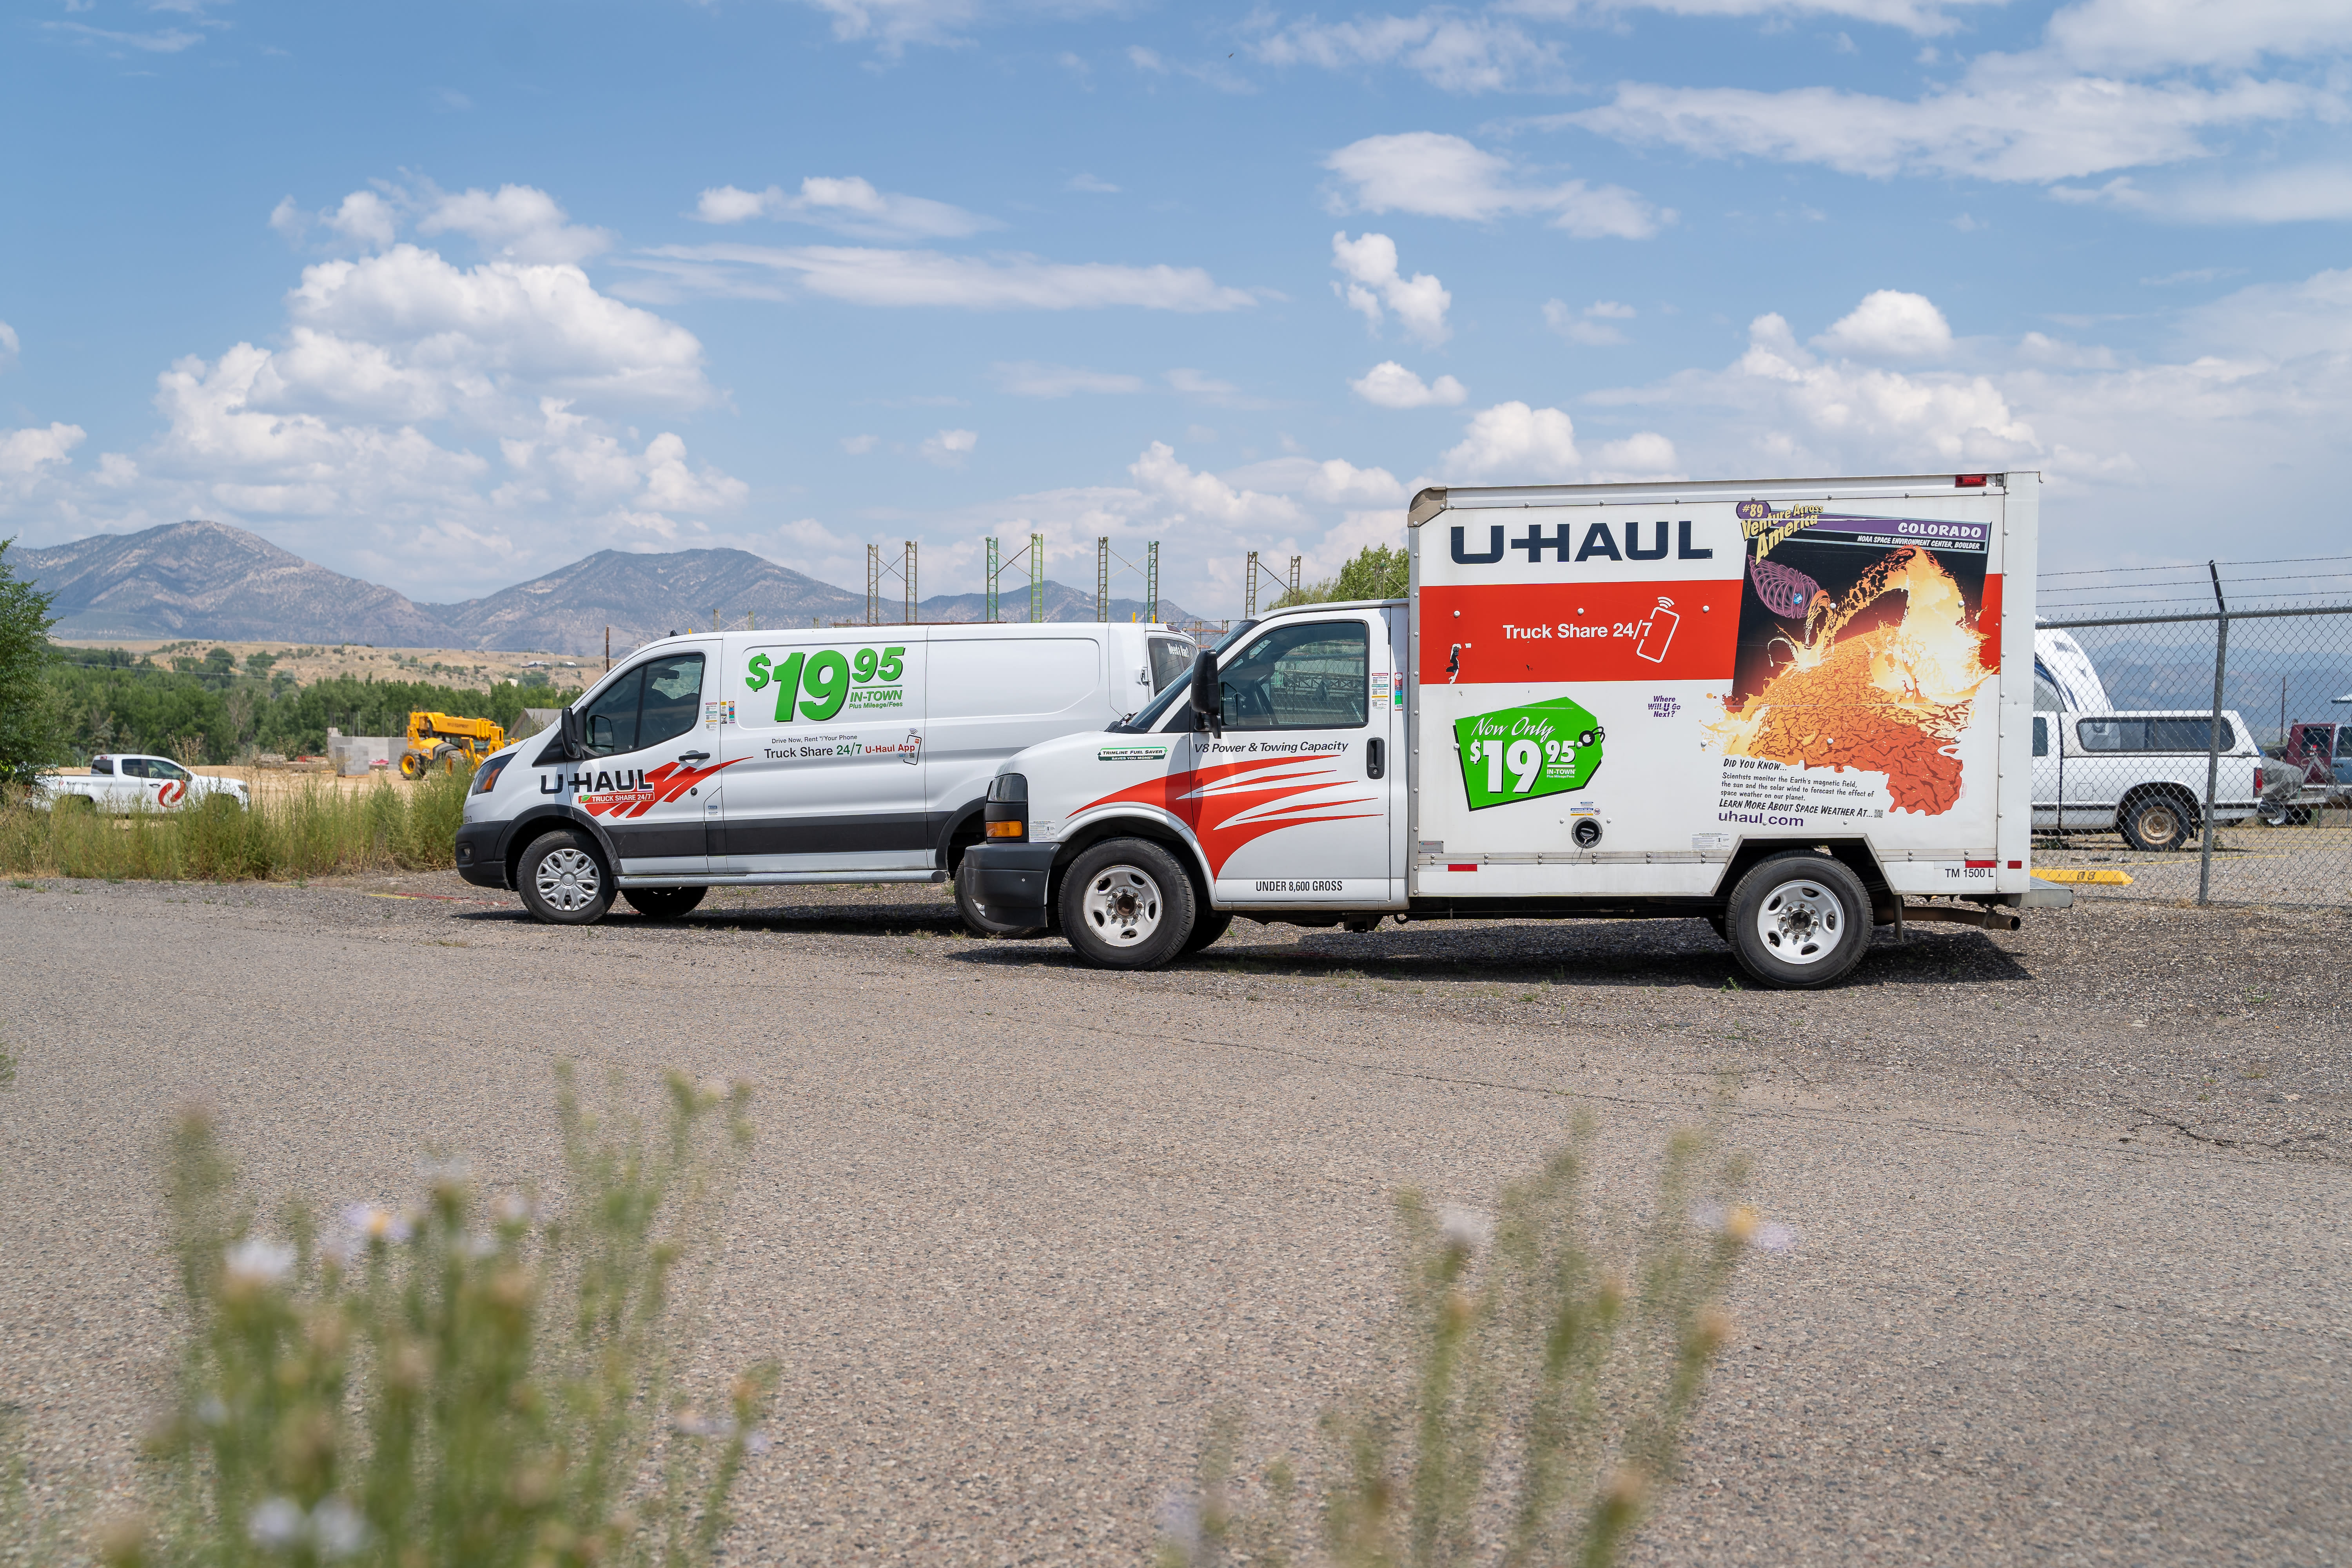 Moving truck rentals at modSTORAGE in Rifle, Colorado